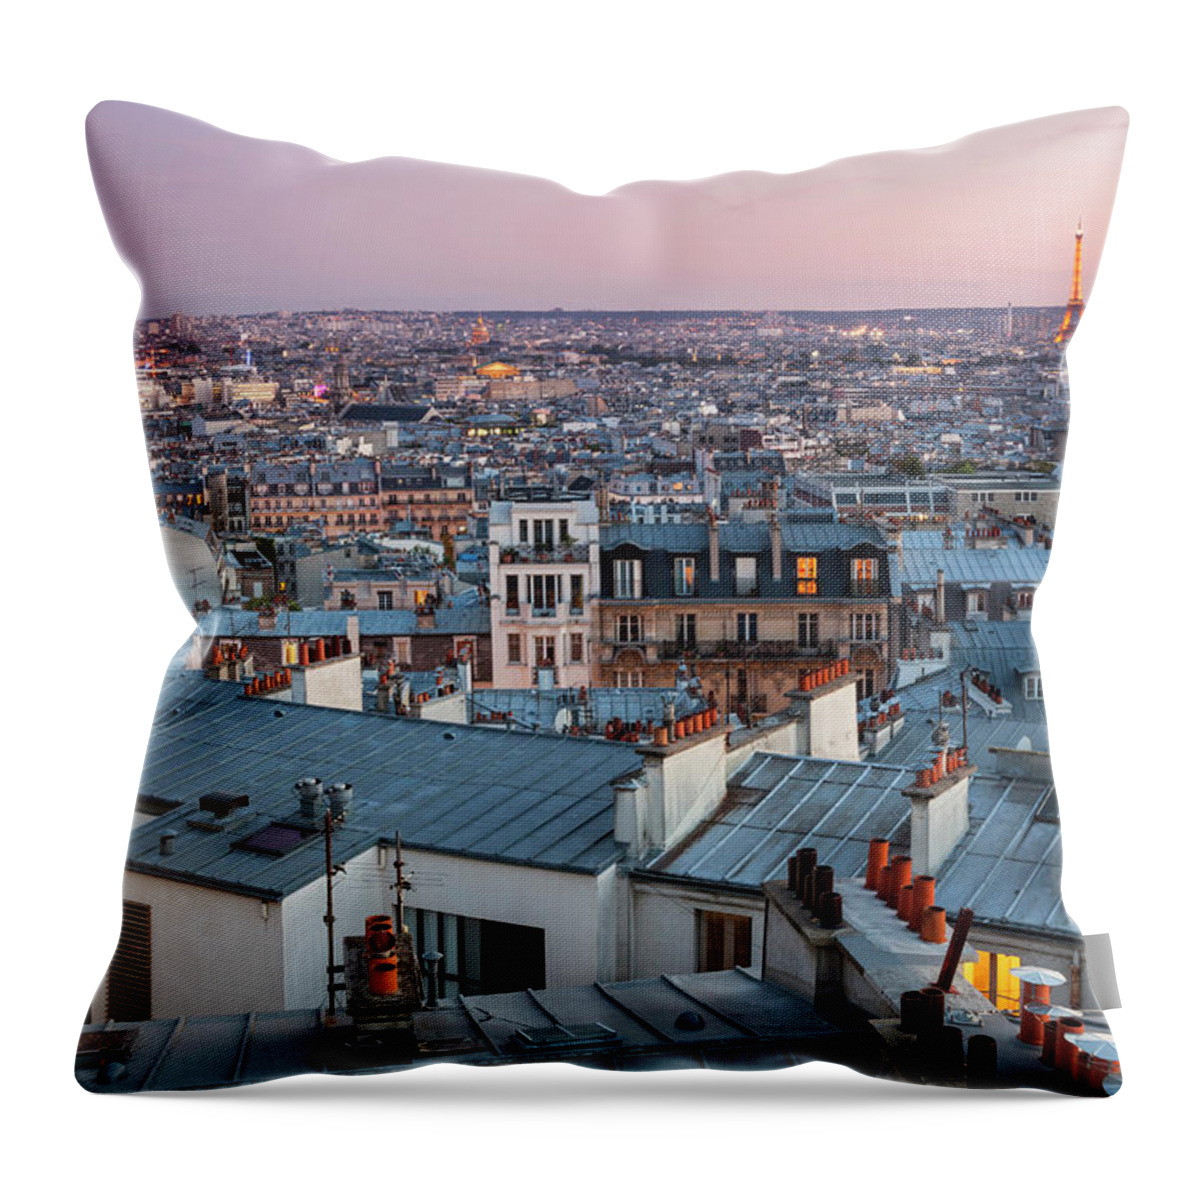 Estock Throw Pillow featuring the digital art City Of Paris by Tim Draper